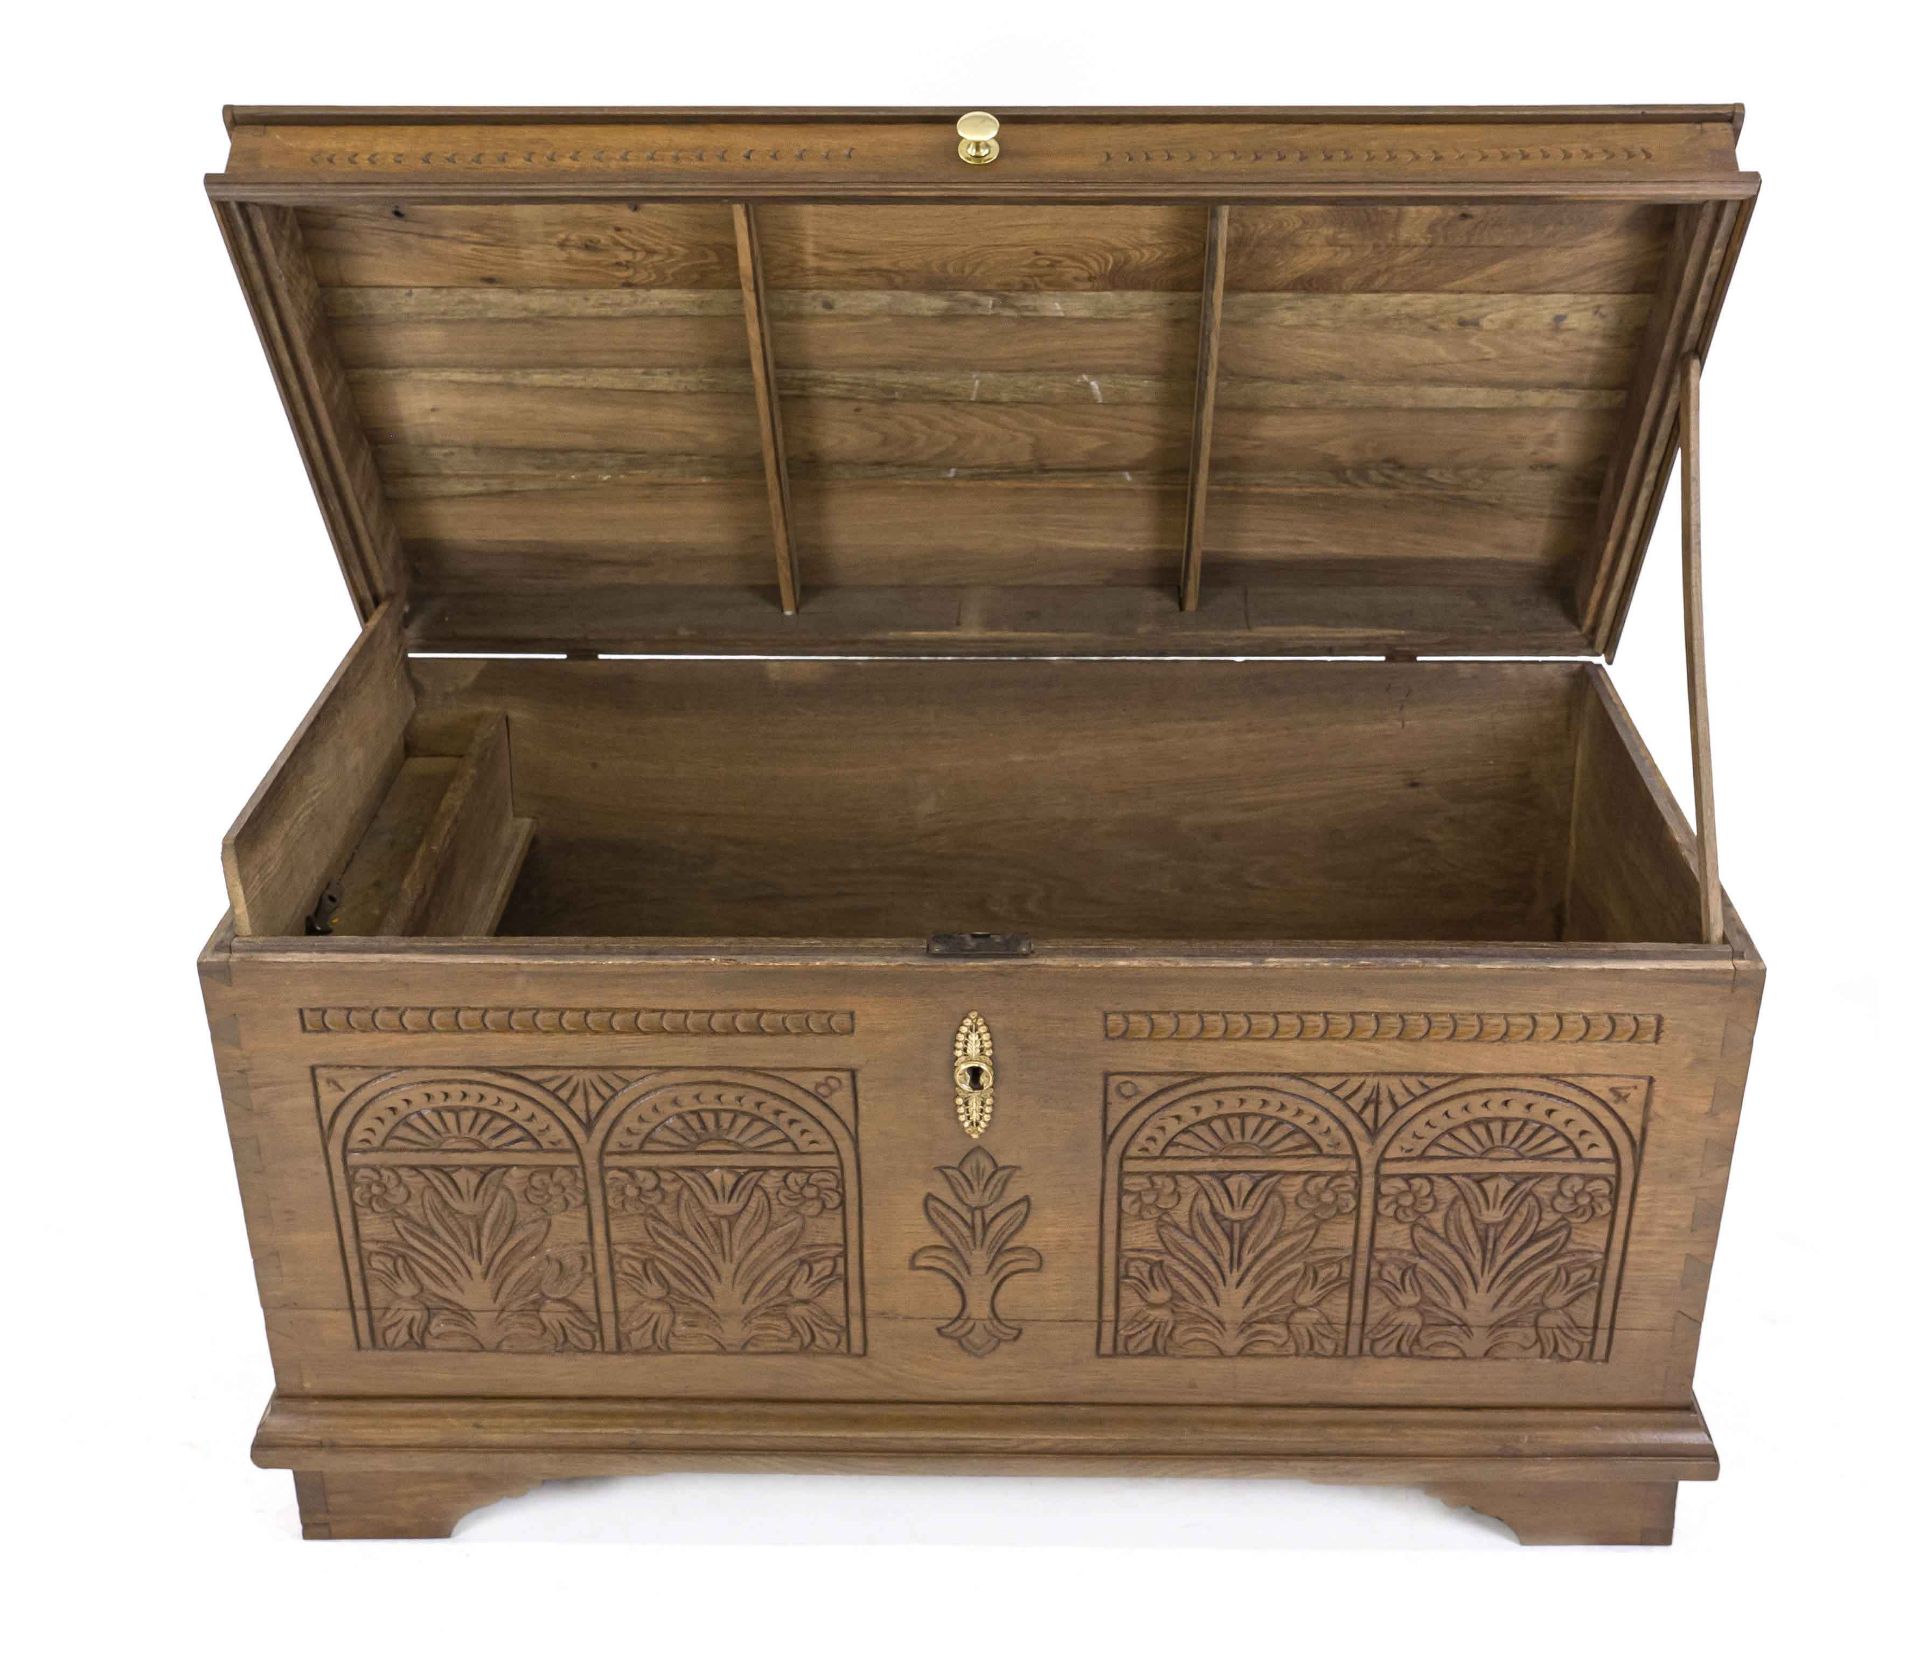 Biedermeier flat-lid chest, probably Ammerland, dated 1804, oak, restored, 72 x 130 x 65 cm - Image 2 of 2